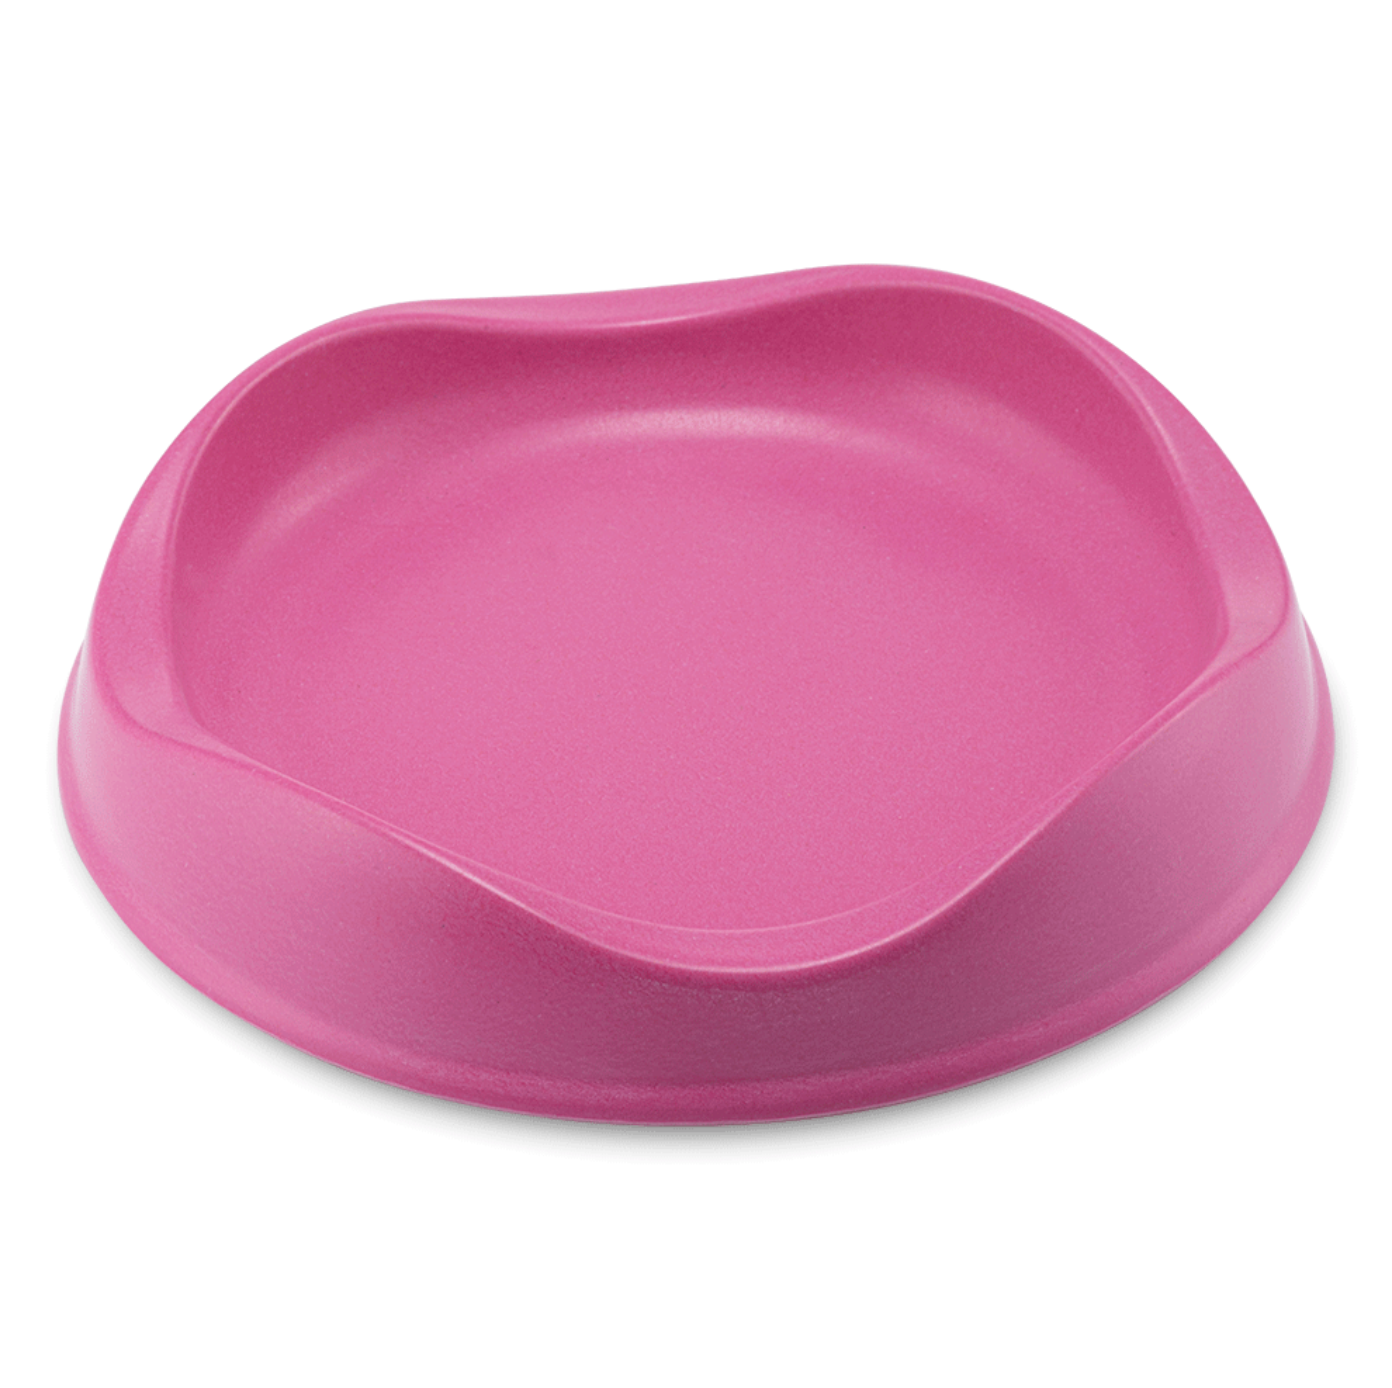 Beco Pink Cat Bowl